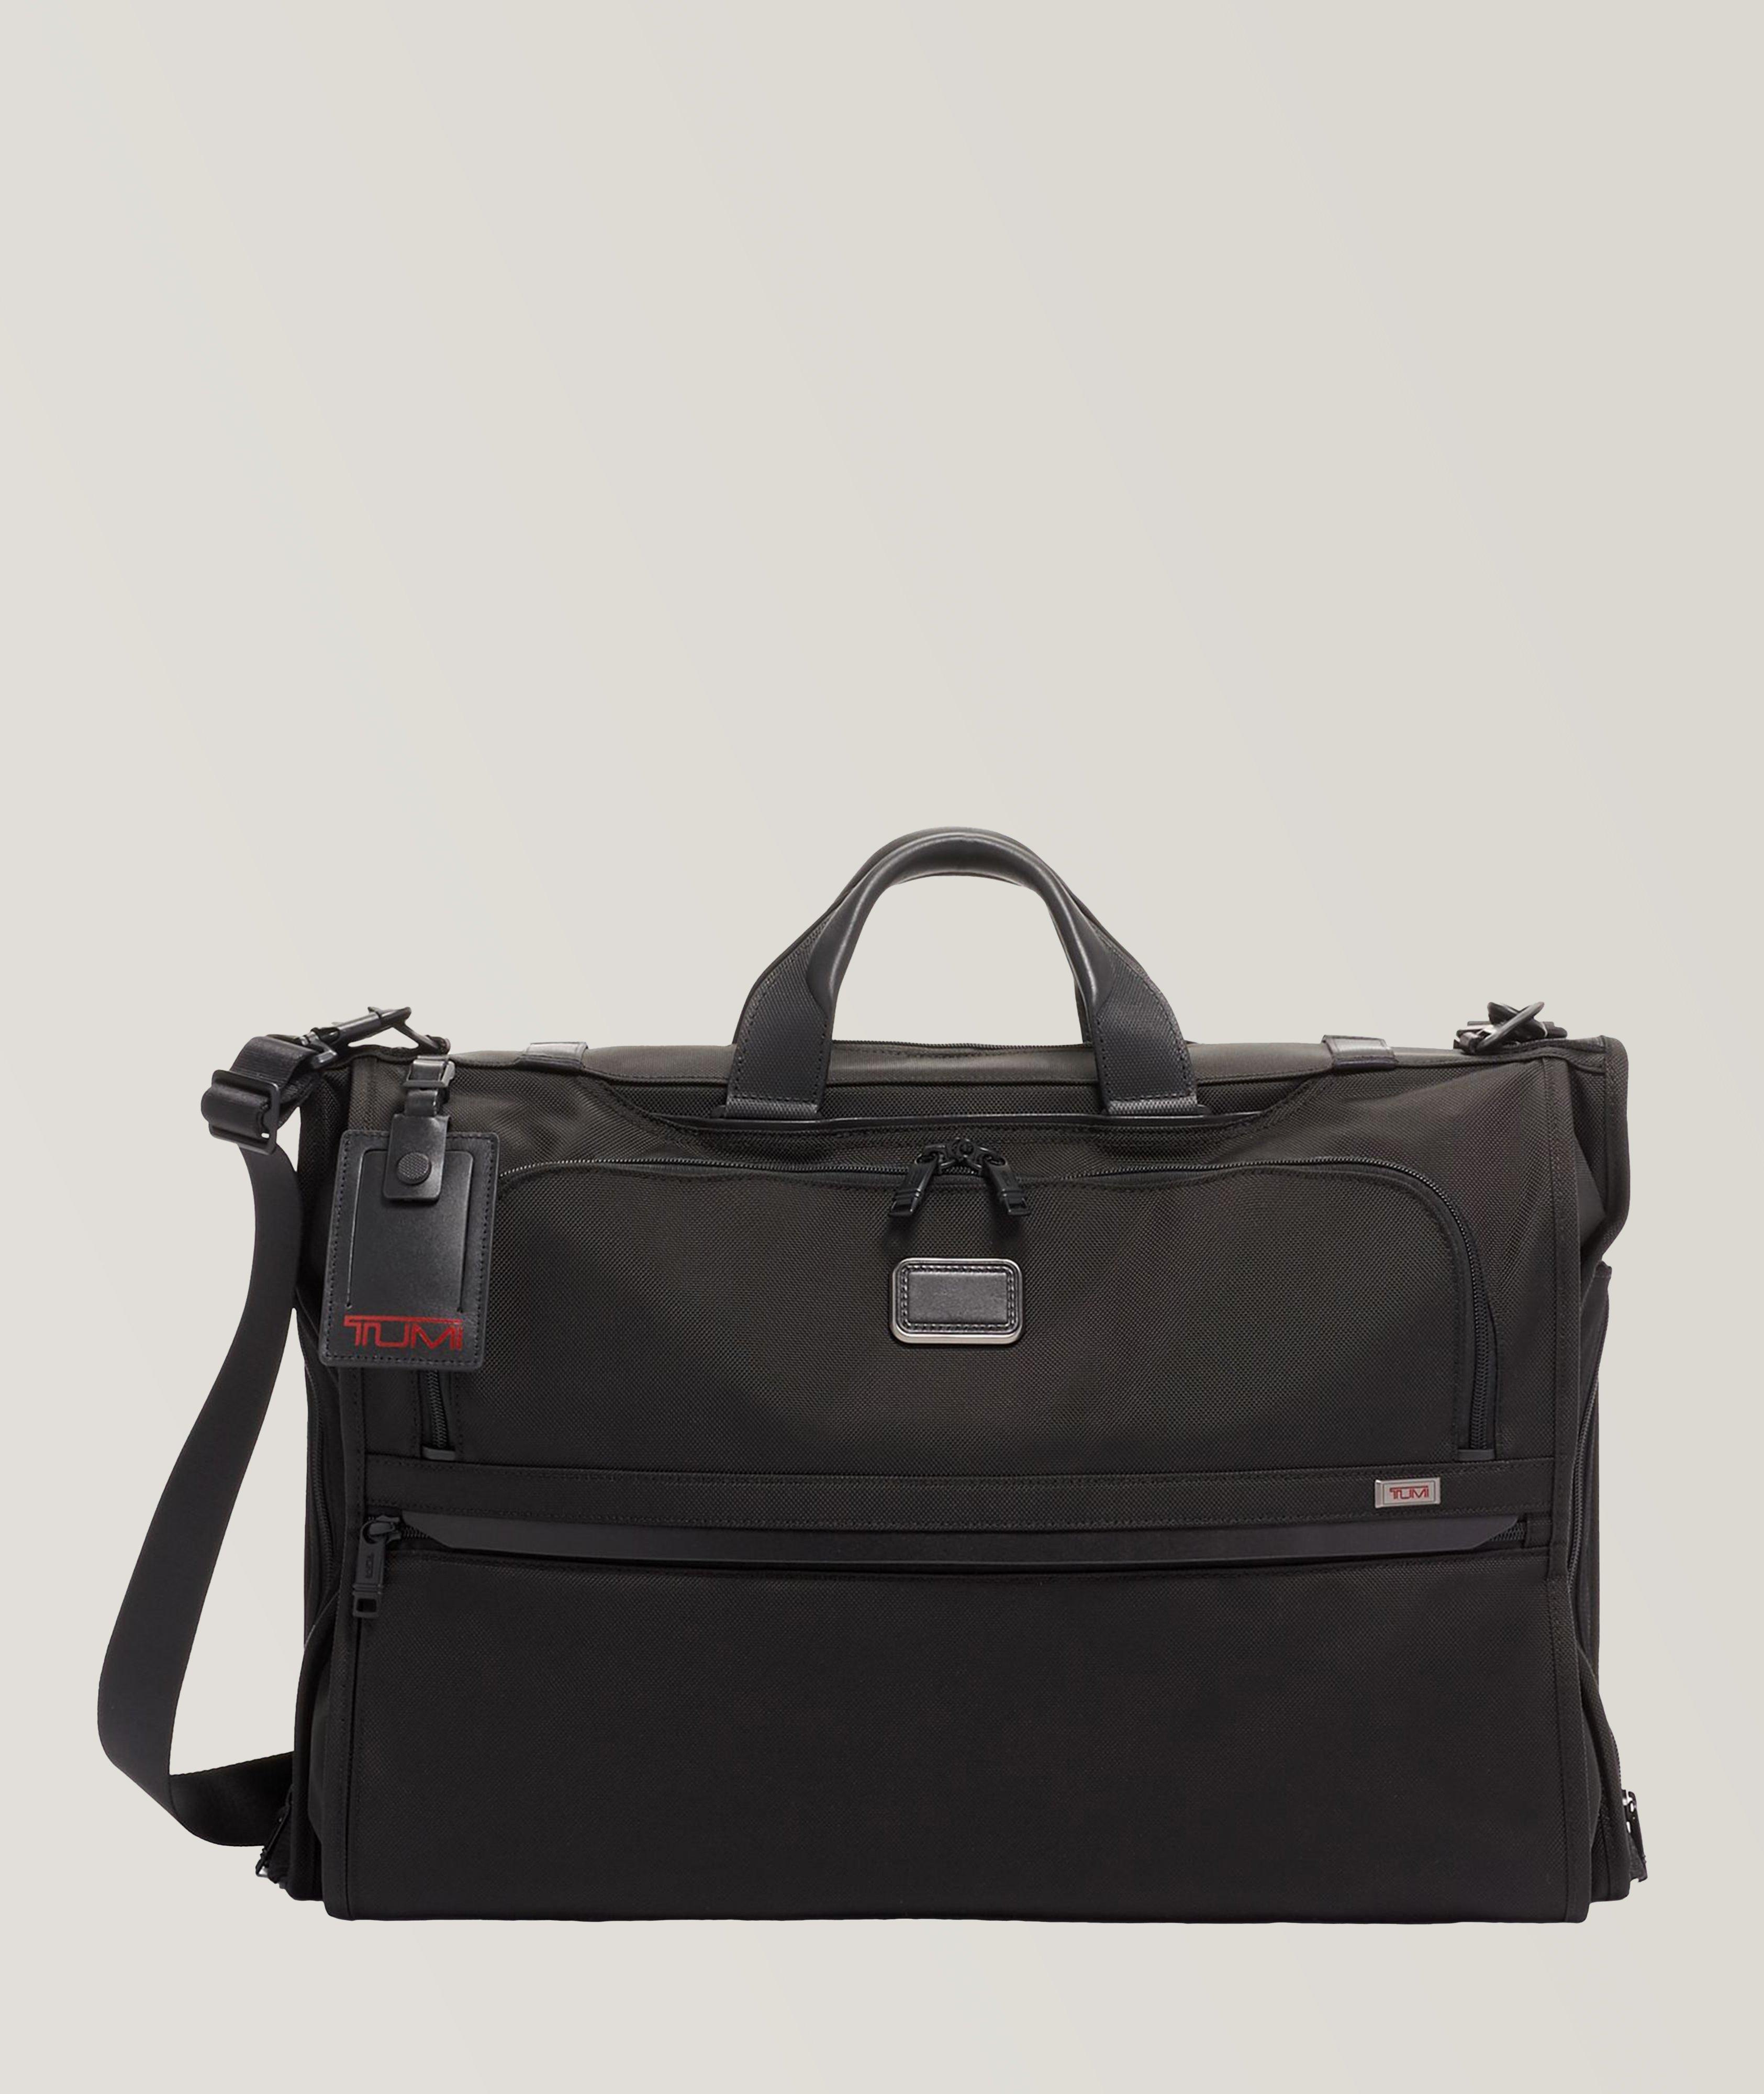 Tri-Fold Carry-On Garment Bag image 0